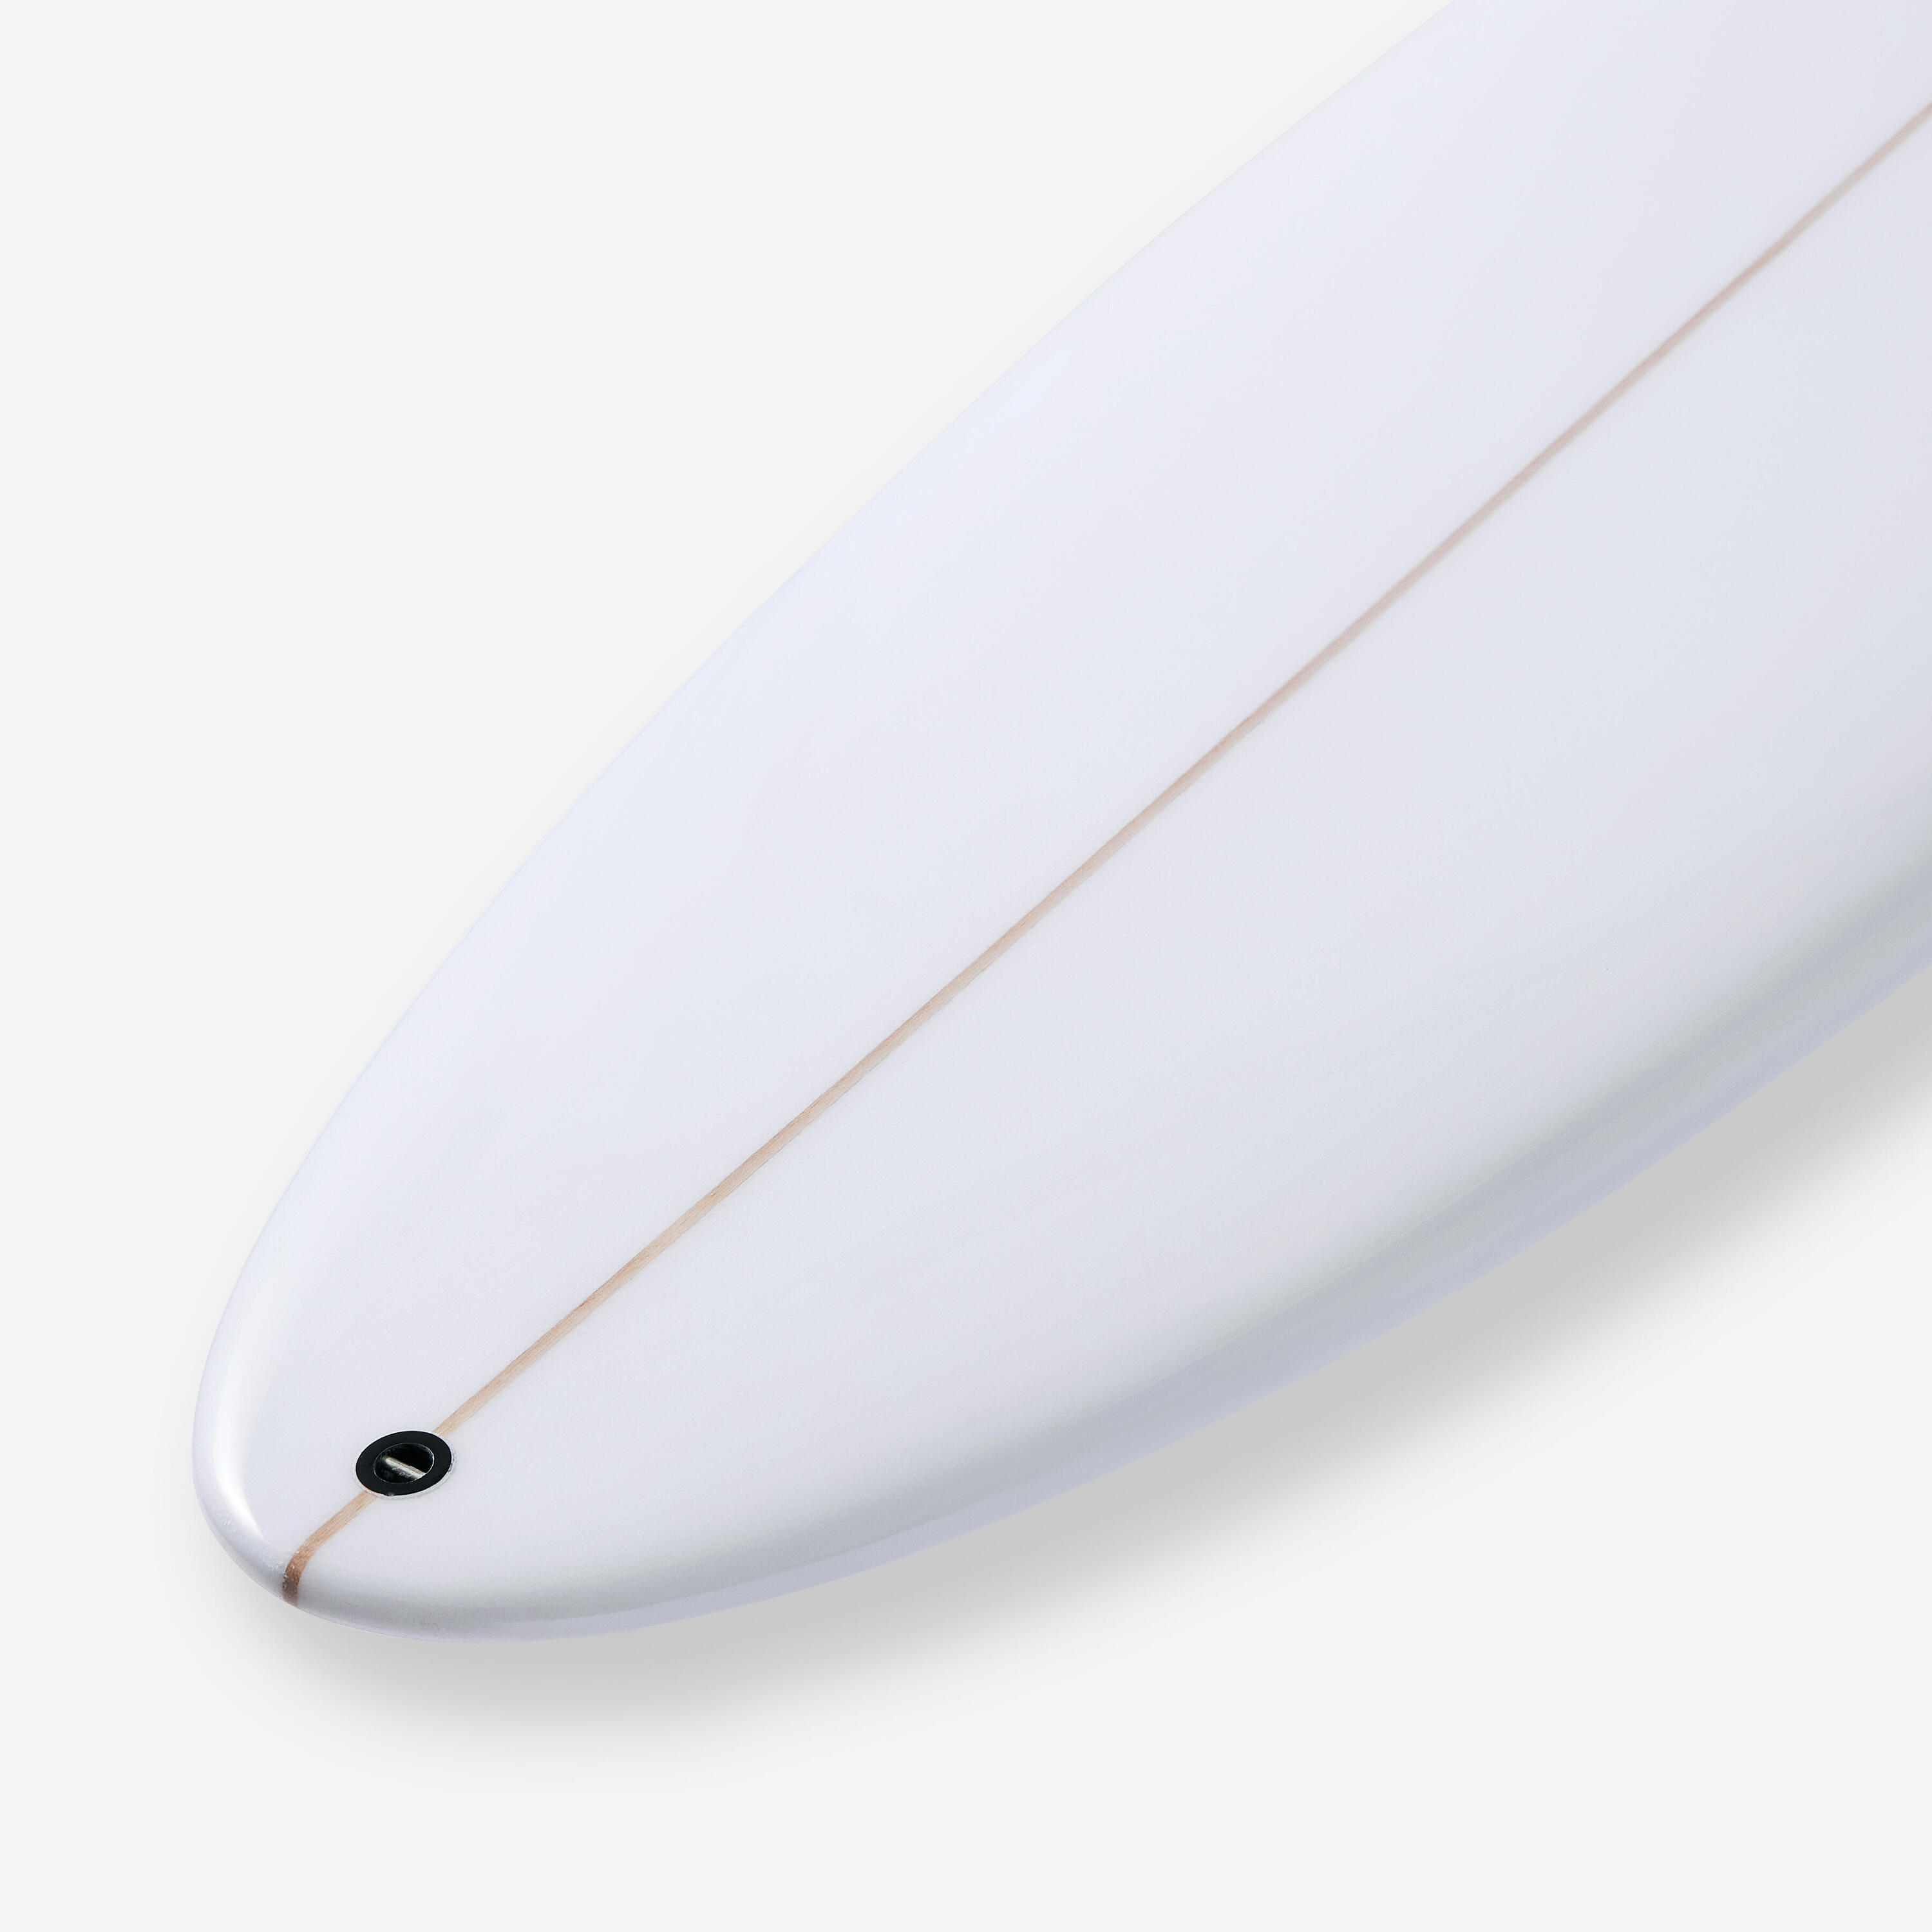 Surfboard 6'8" - 900 mid-length white 6/11